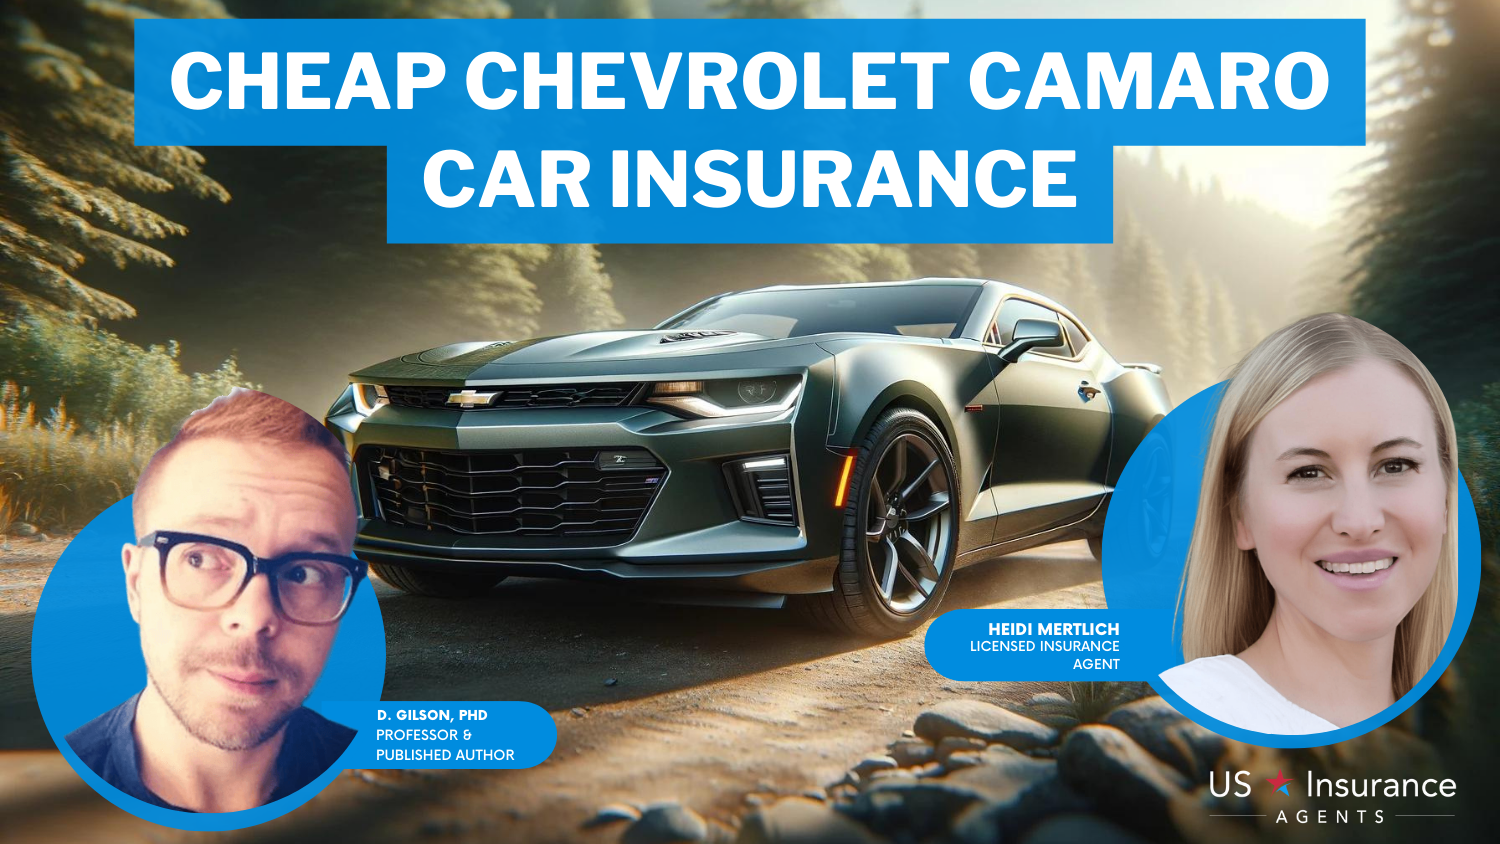 Cheap Chevrolet Camaro Car Insurance: Farmers, Allstate, And USAA